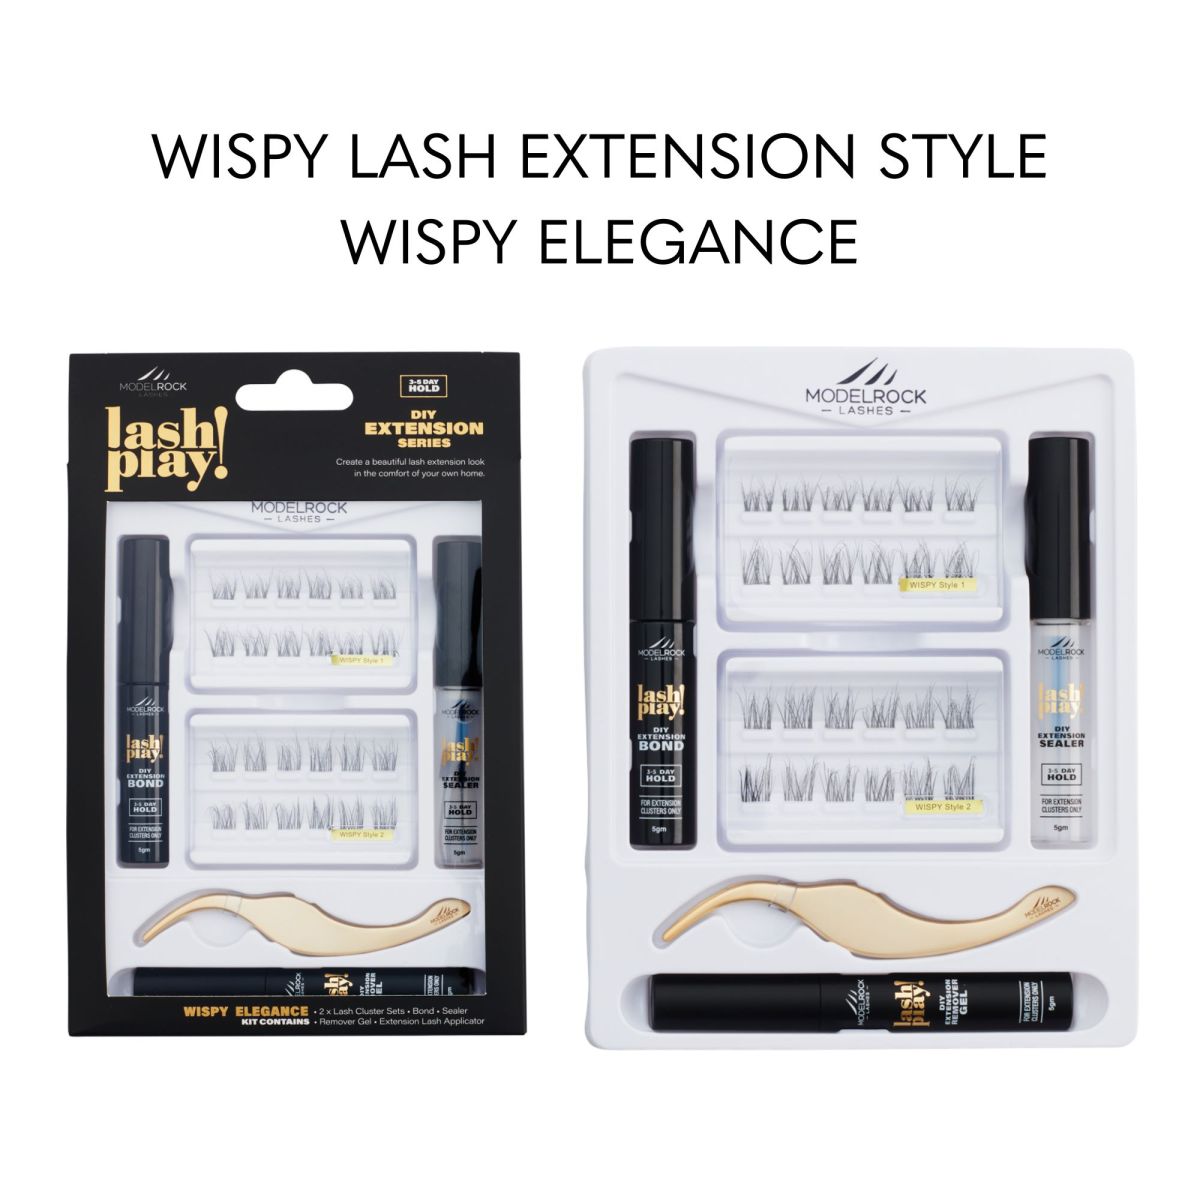 Wispy lash extension style